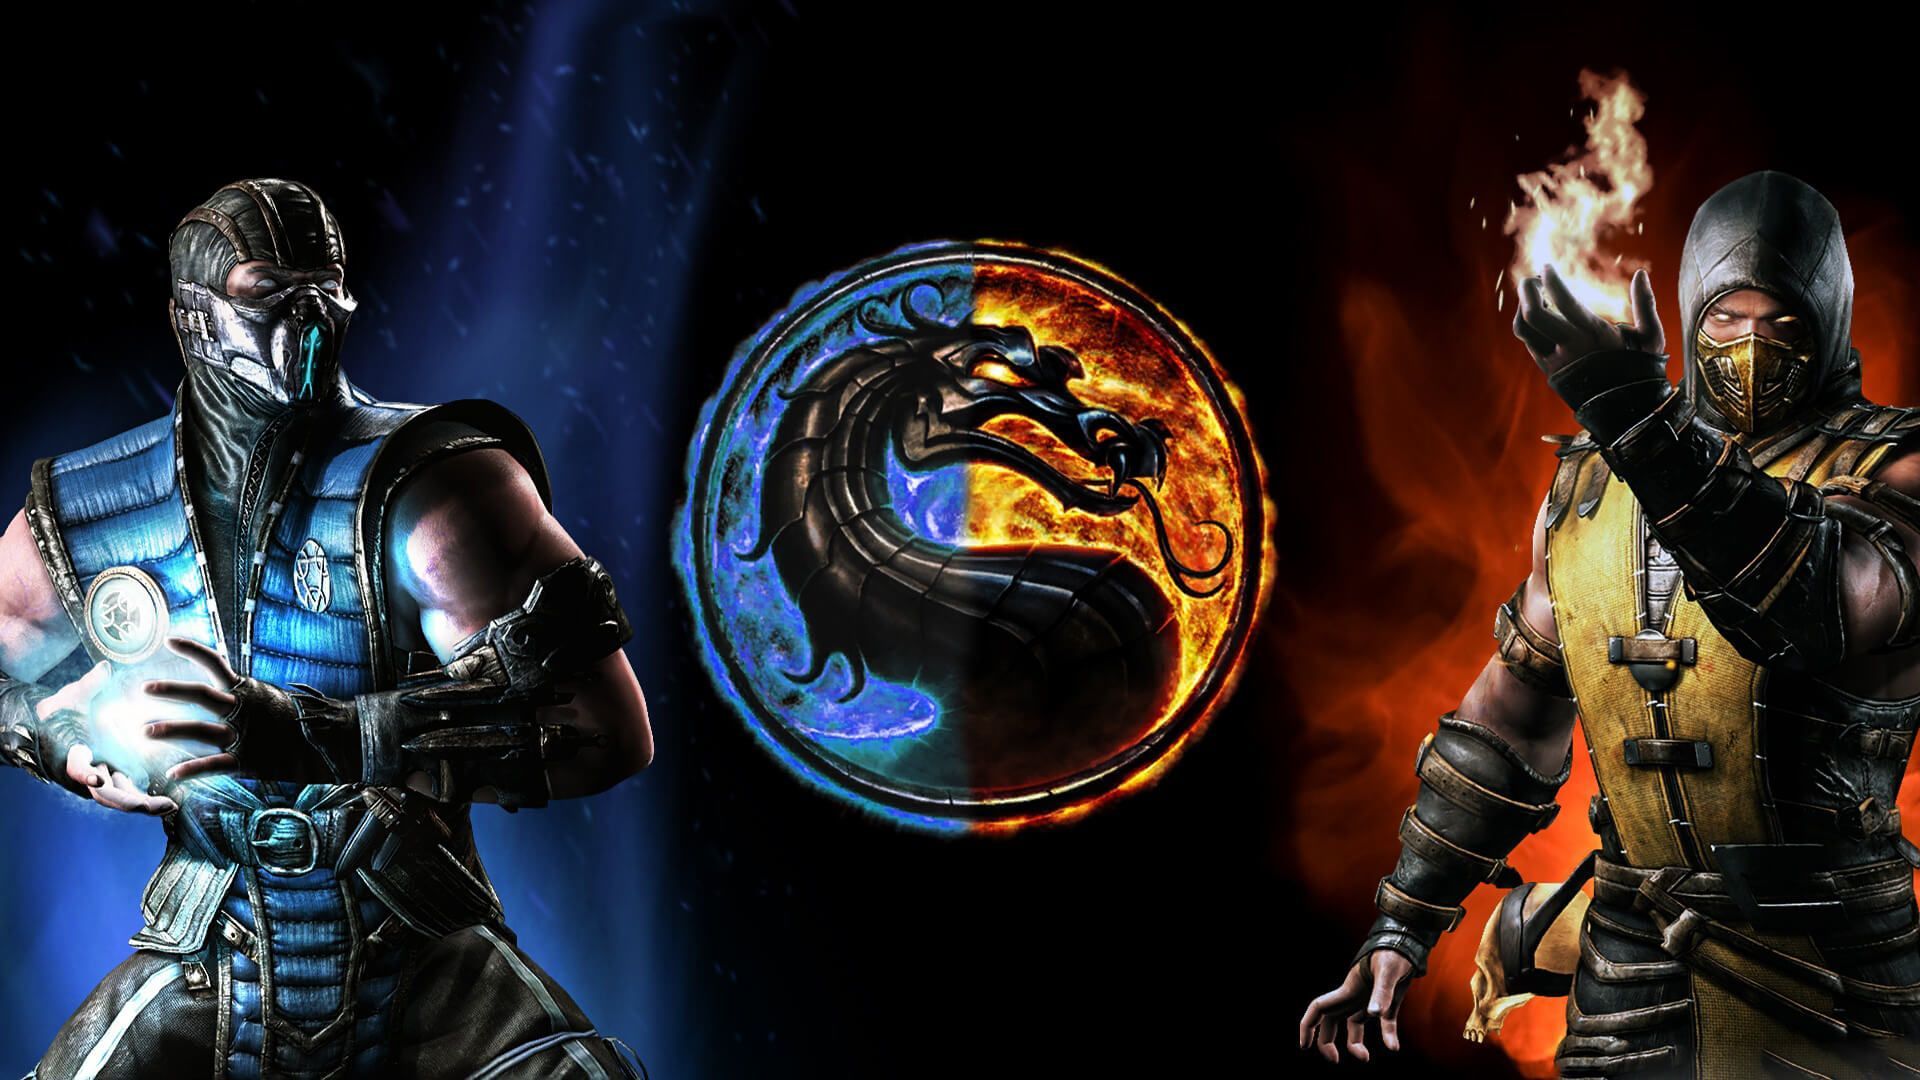 SubZero-vs-Scorpion-in-Mortal-Kombat-X-Wallpaper.jpg